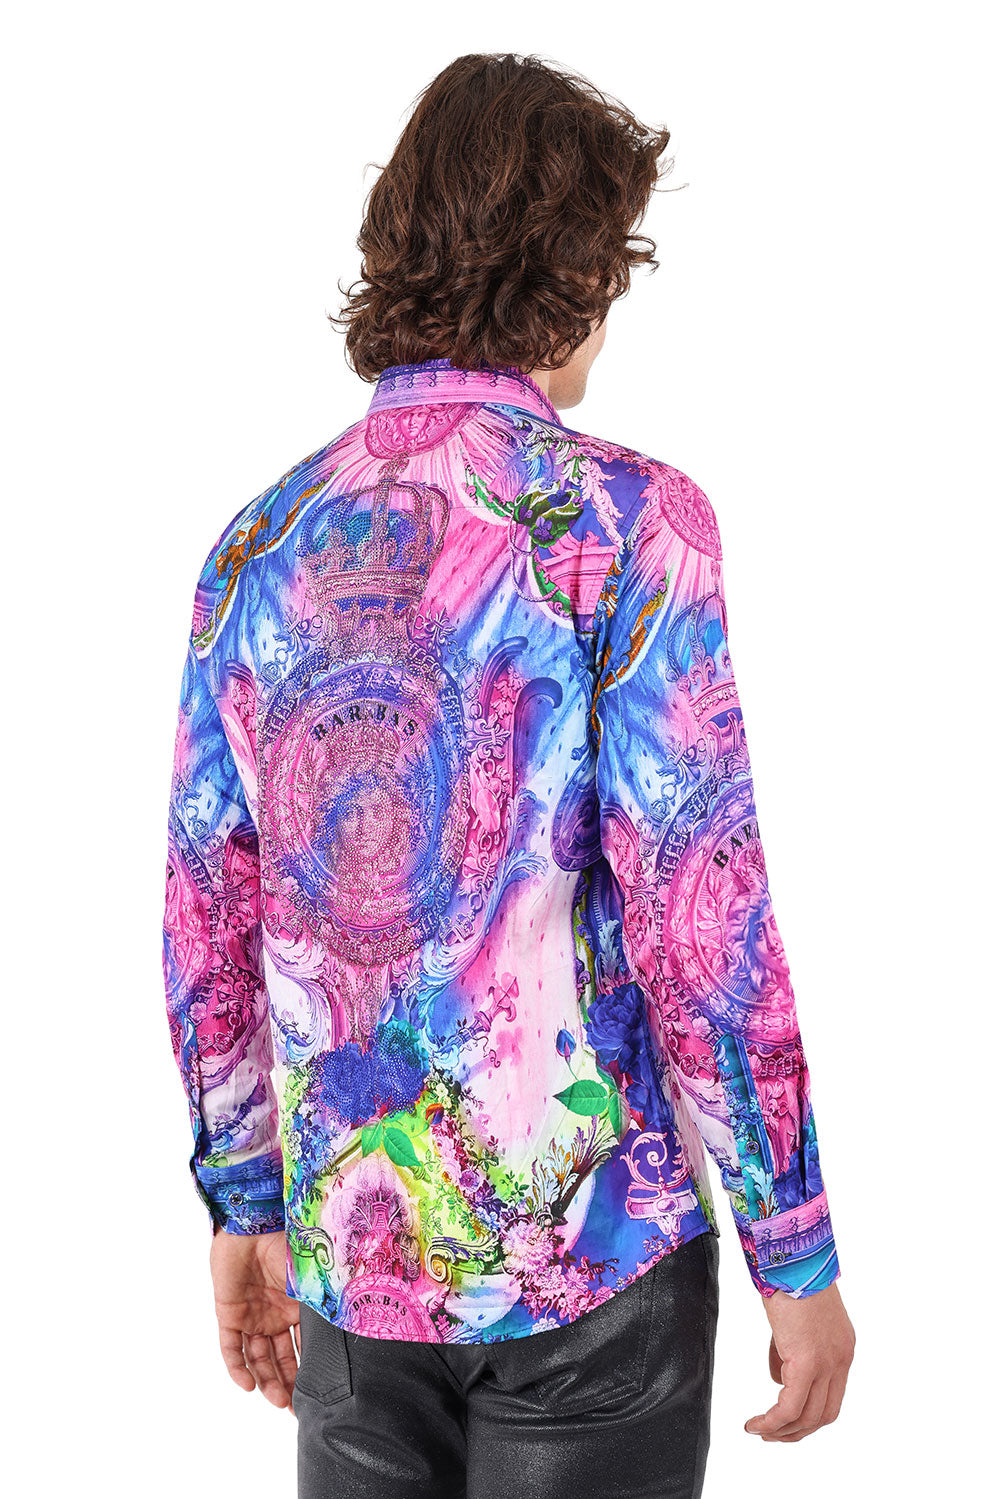 BARABAS Men's Rhinestone Medusa Floral Printed Baroque Shirt 2SPR222 Pink